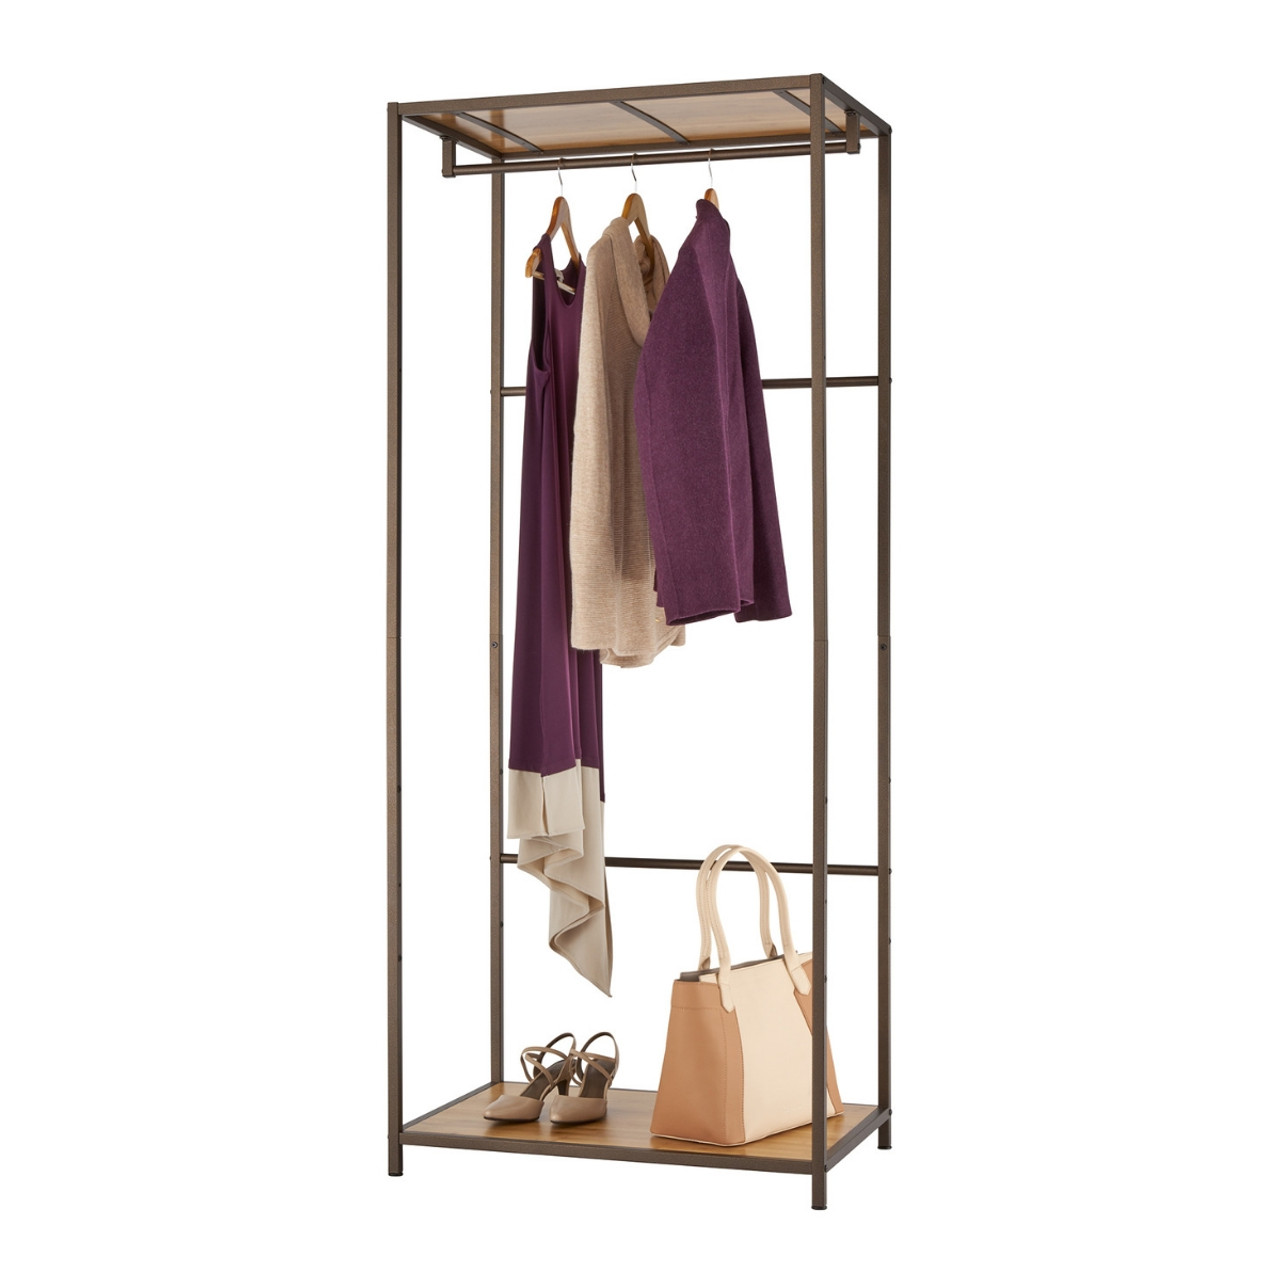 2/3/4 Tier Hanging Storage Bag for Clothes Wardrobe Hangers Closet